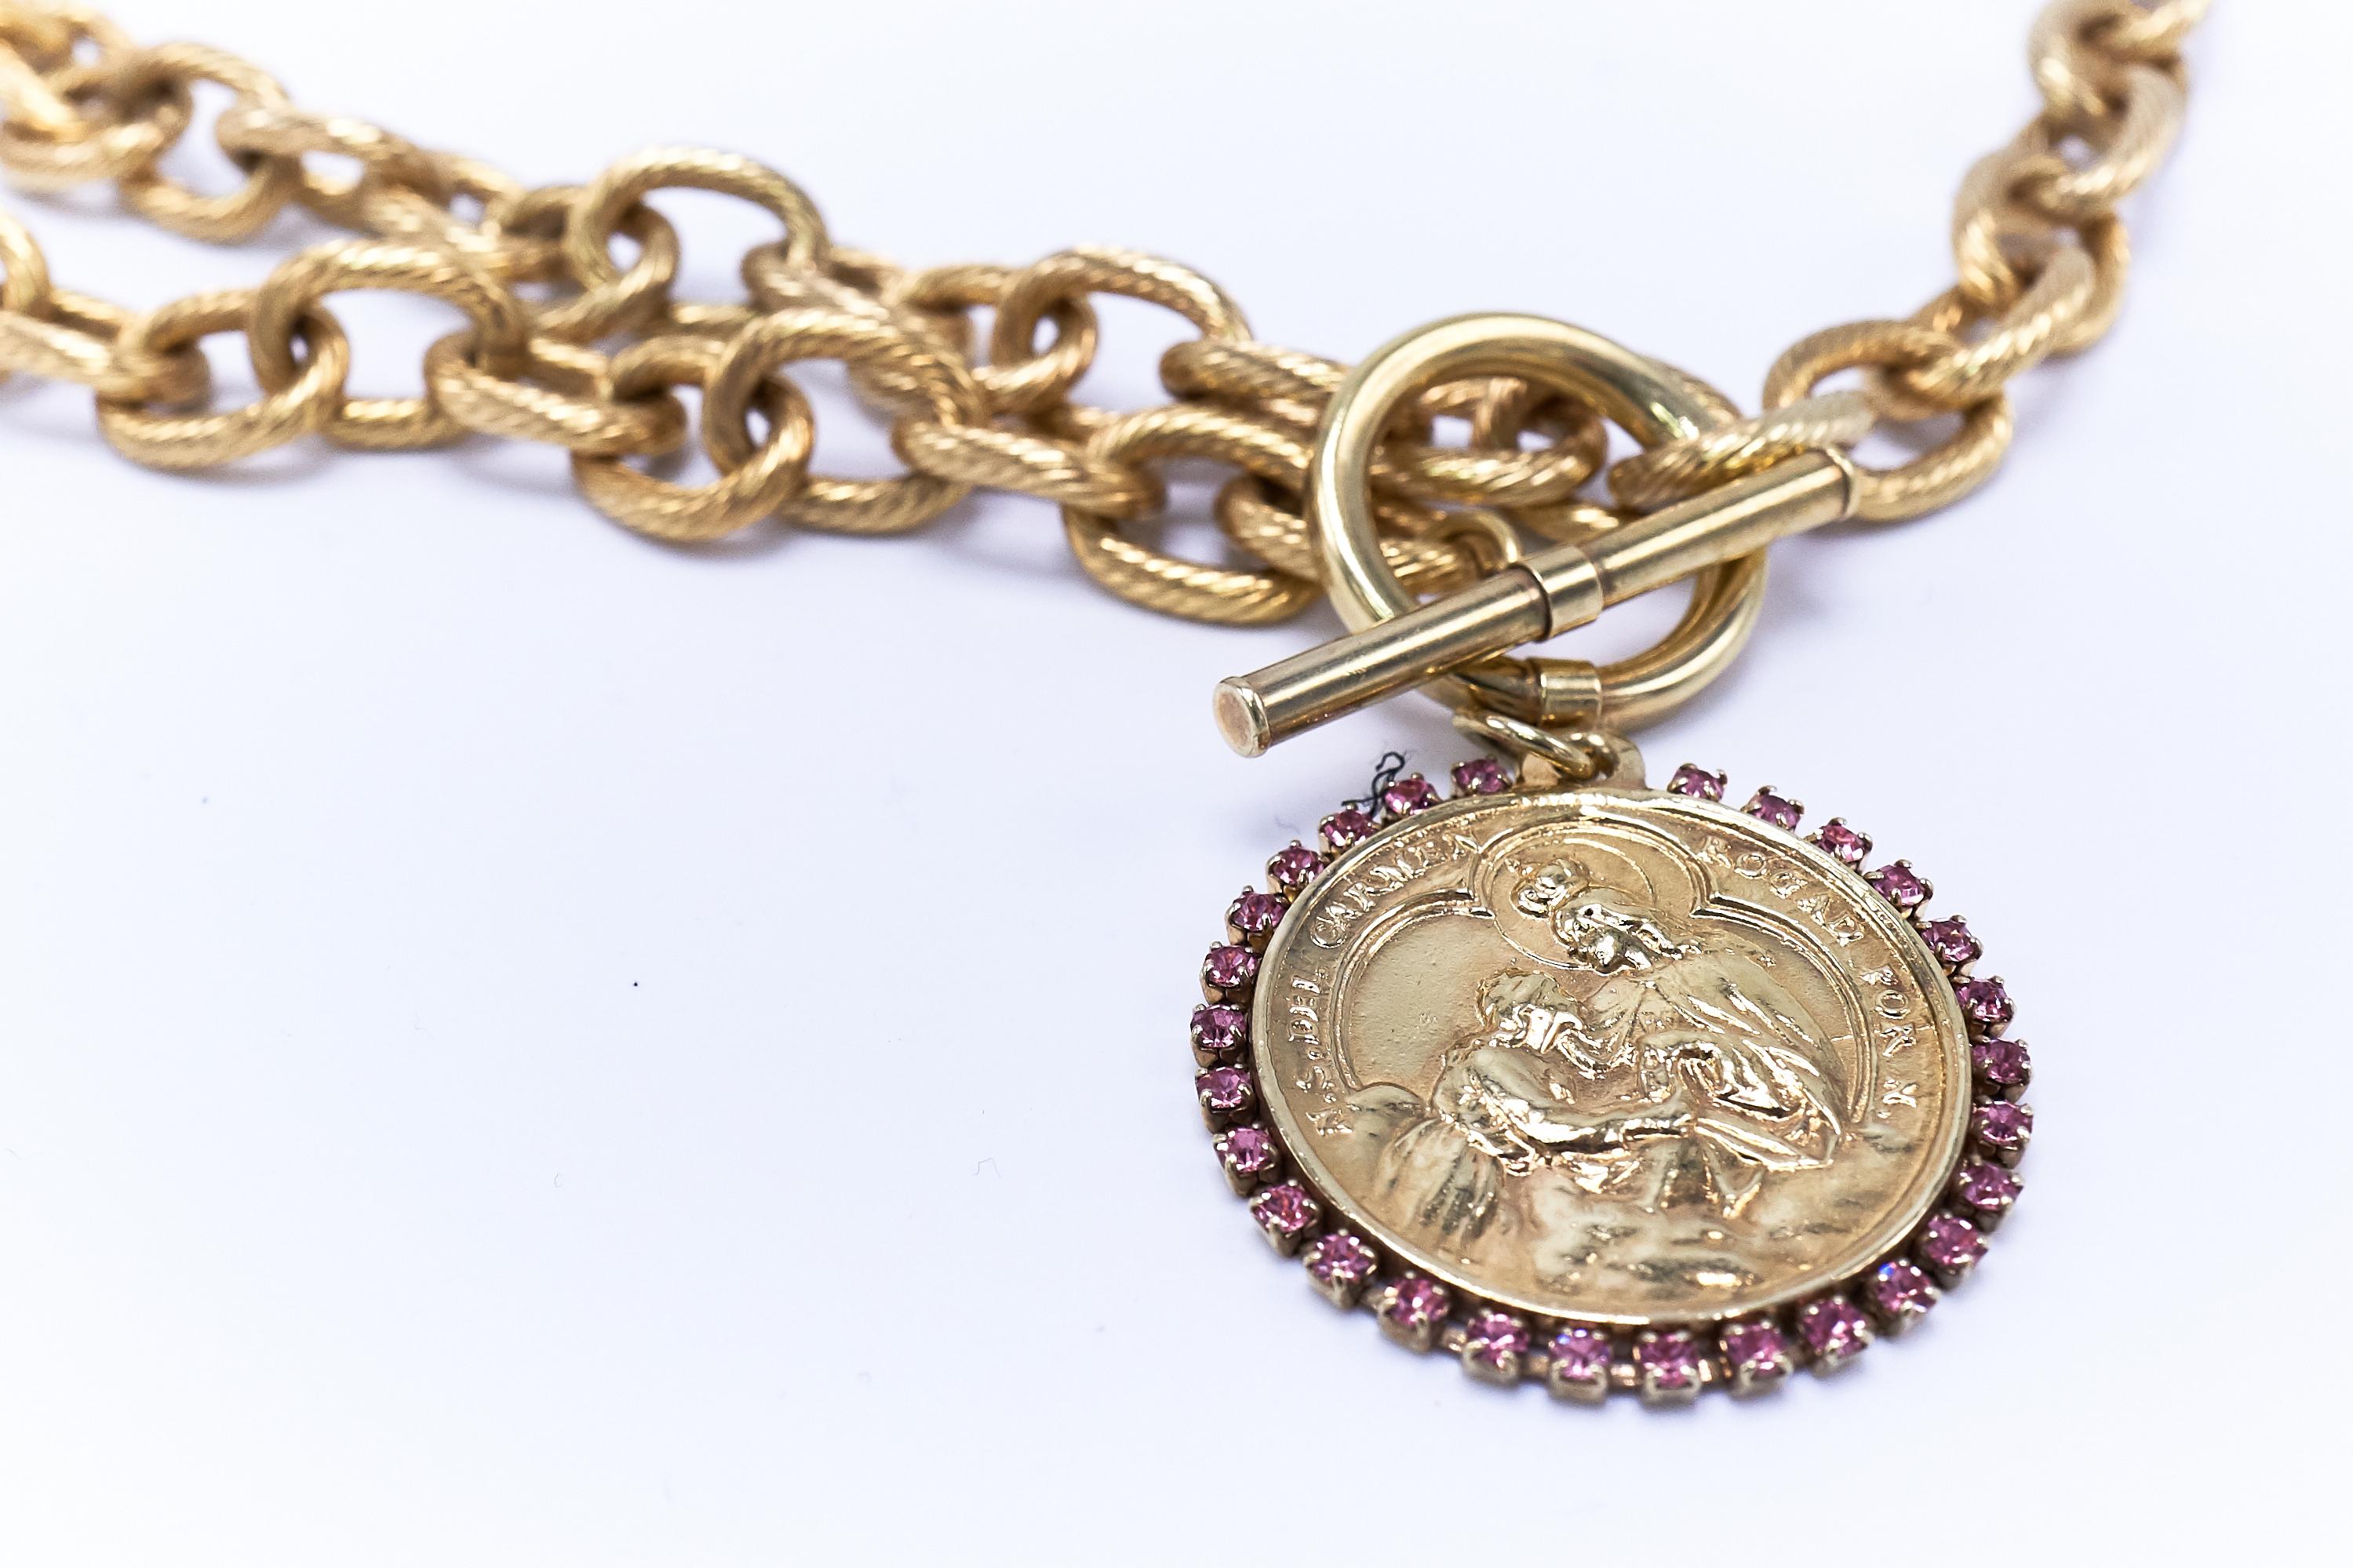 Choker Kette Halskette Medaille Strass vergoldet Jungfrau Maria Anhänger J Dauphin

J DAUPHIN Halskette 